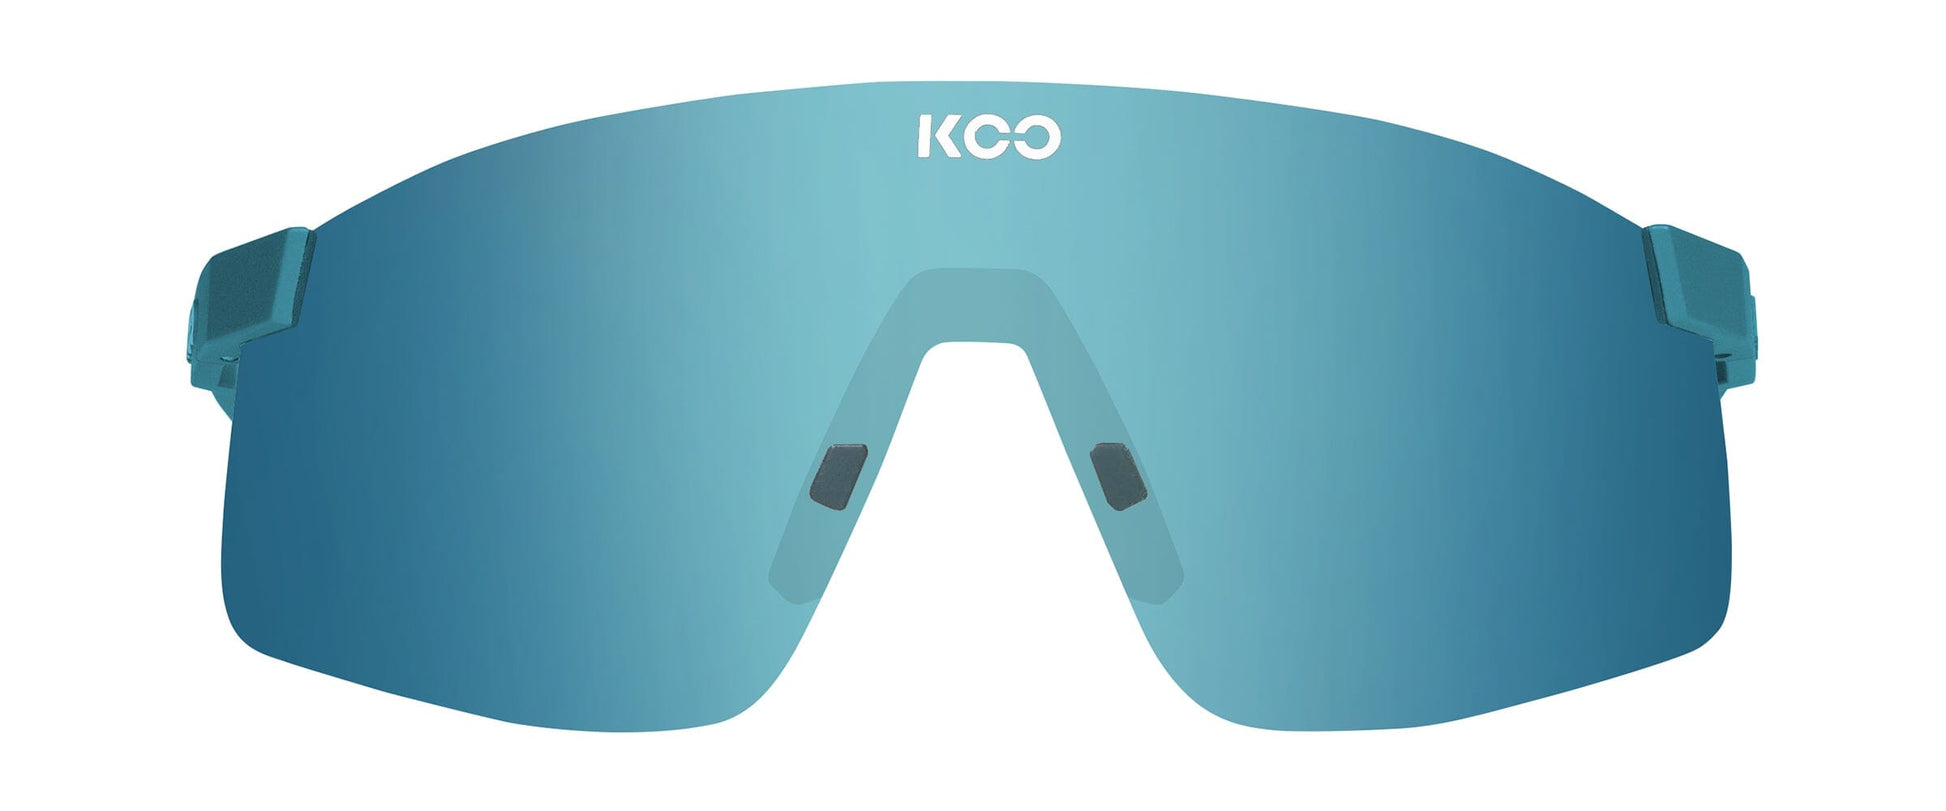 KOO - Sunglasses NOVA Aqua Mat / Turquoise Sunglasses KOO 